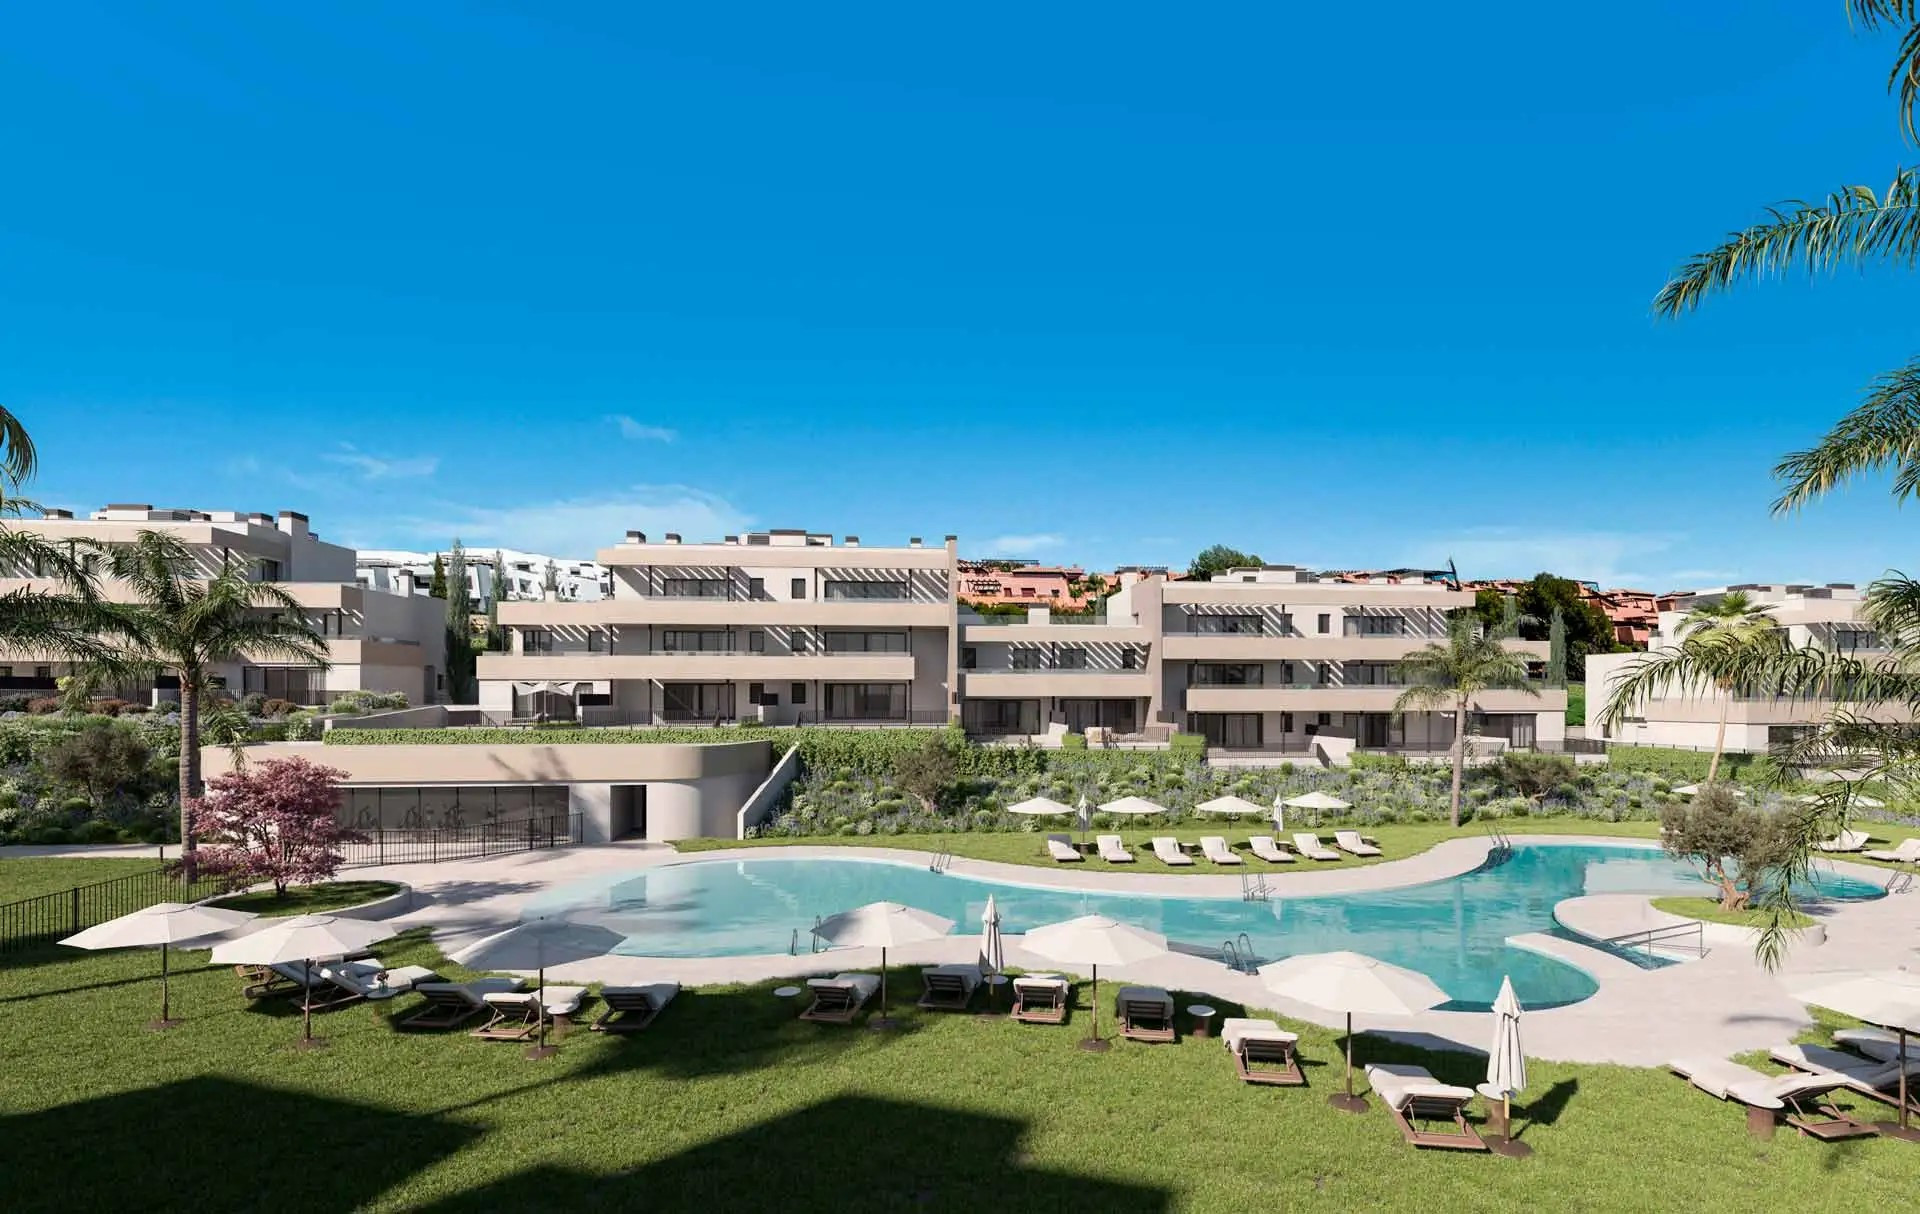 Brand New Two bedroom garden apartment, Caseres Costa, Costa del Sol